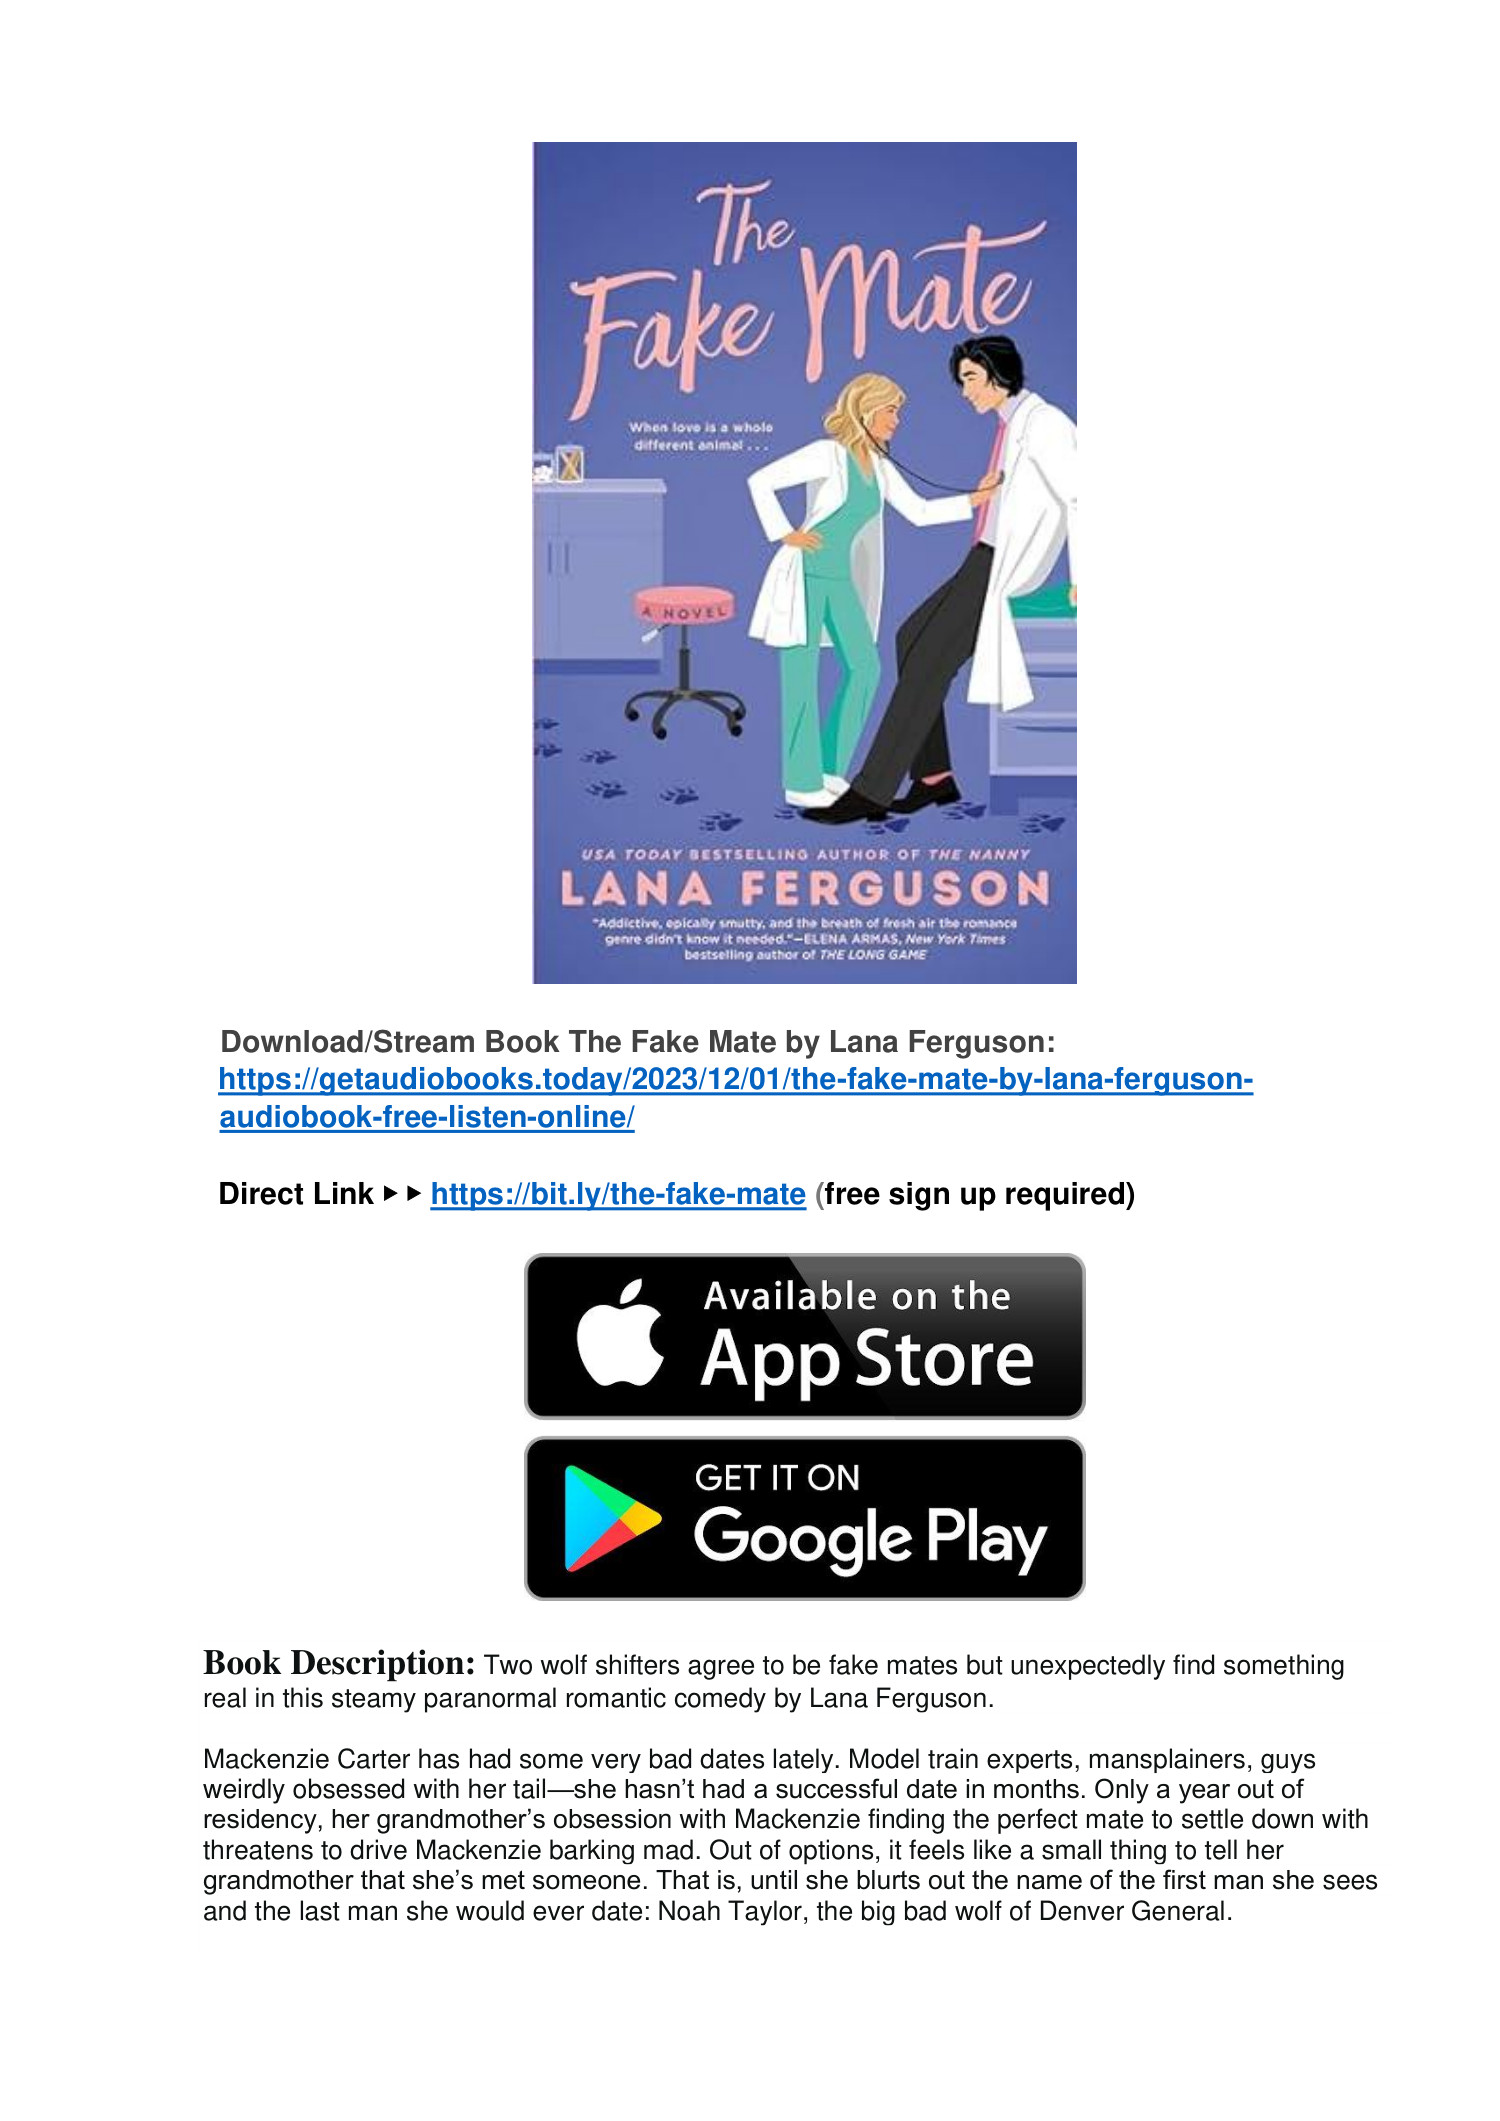 PDF Book The Fake Mate by Lana Ferguson Audiobook Free Download